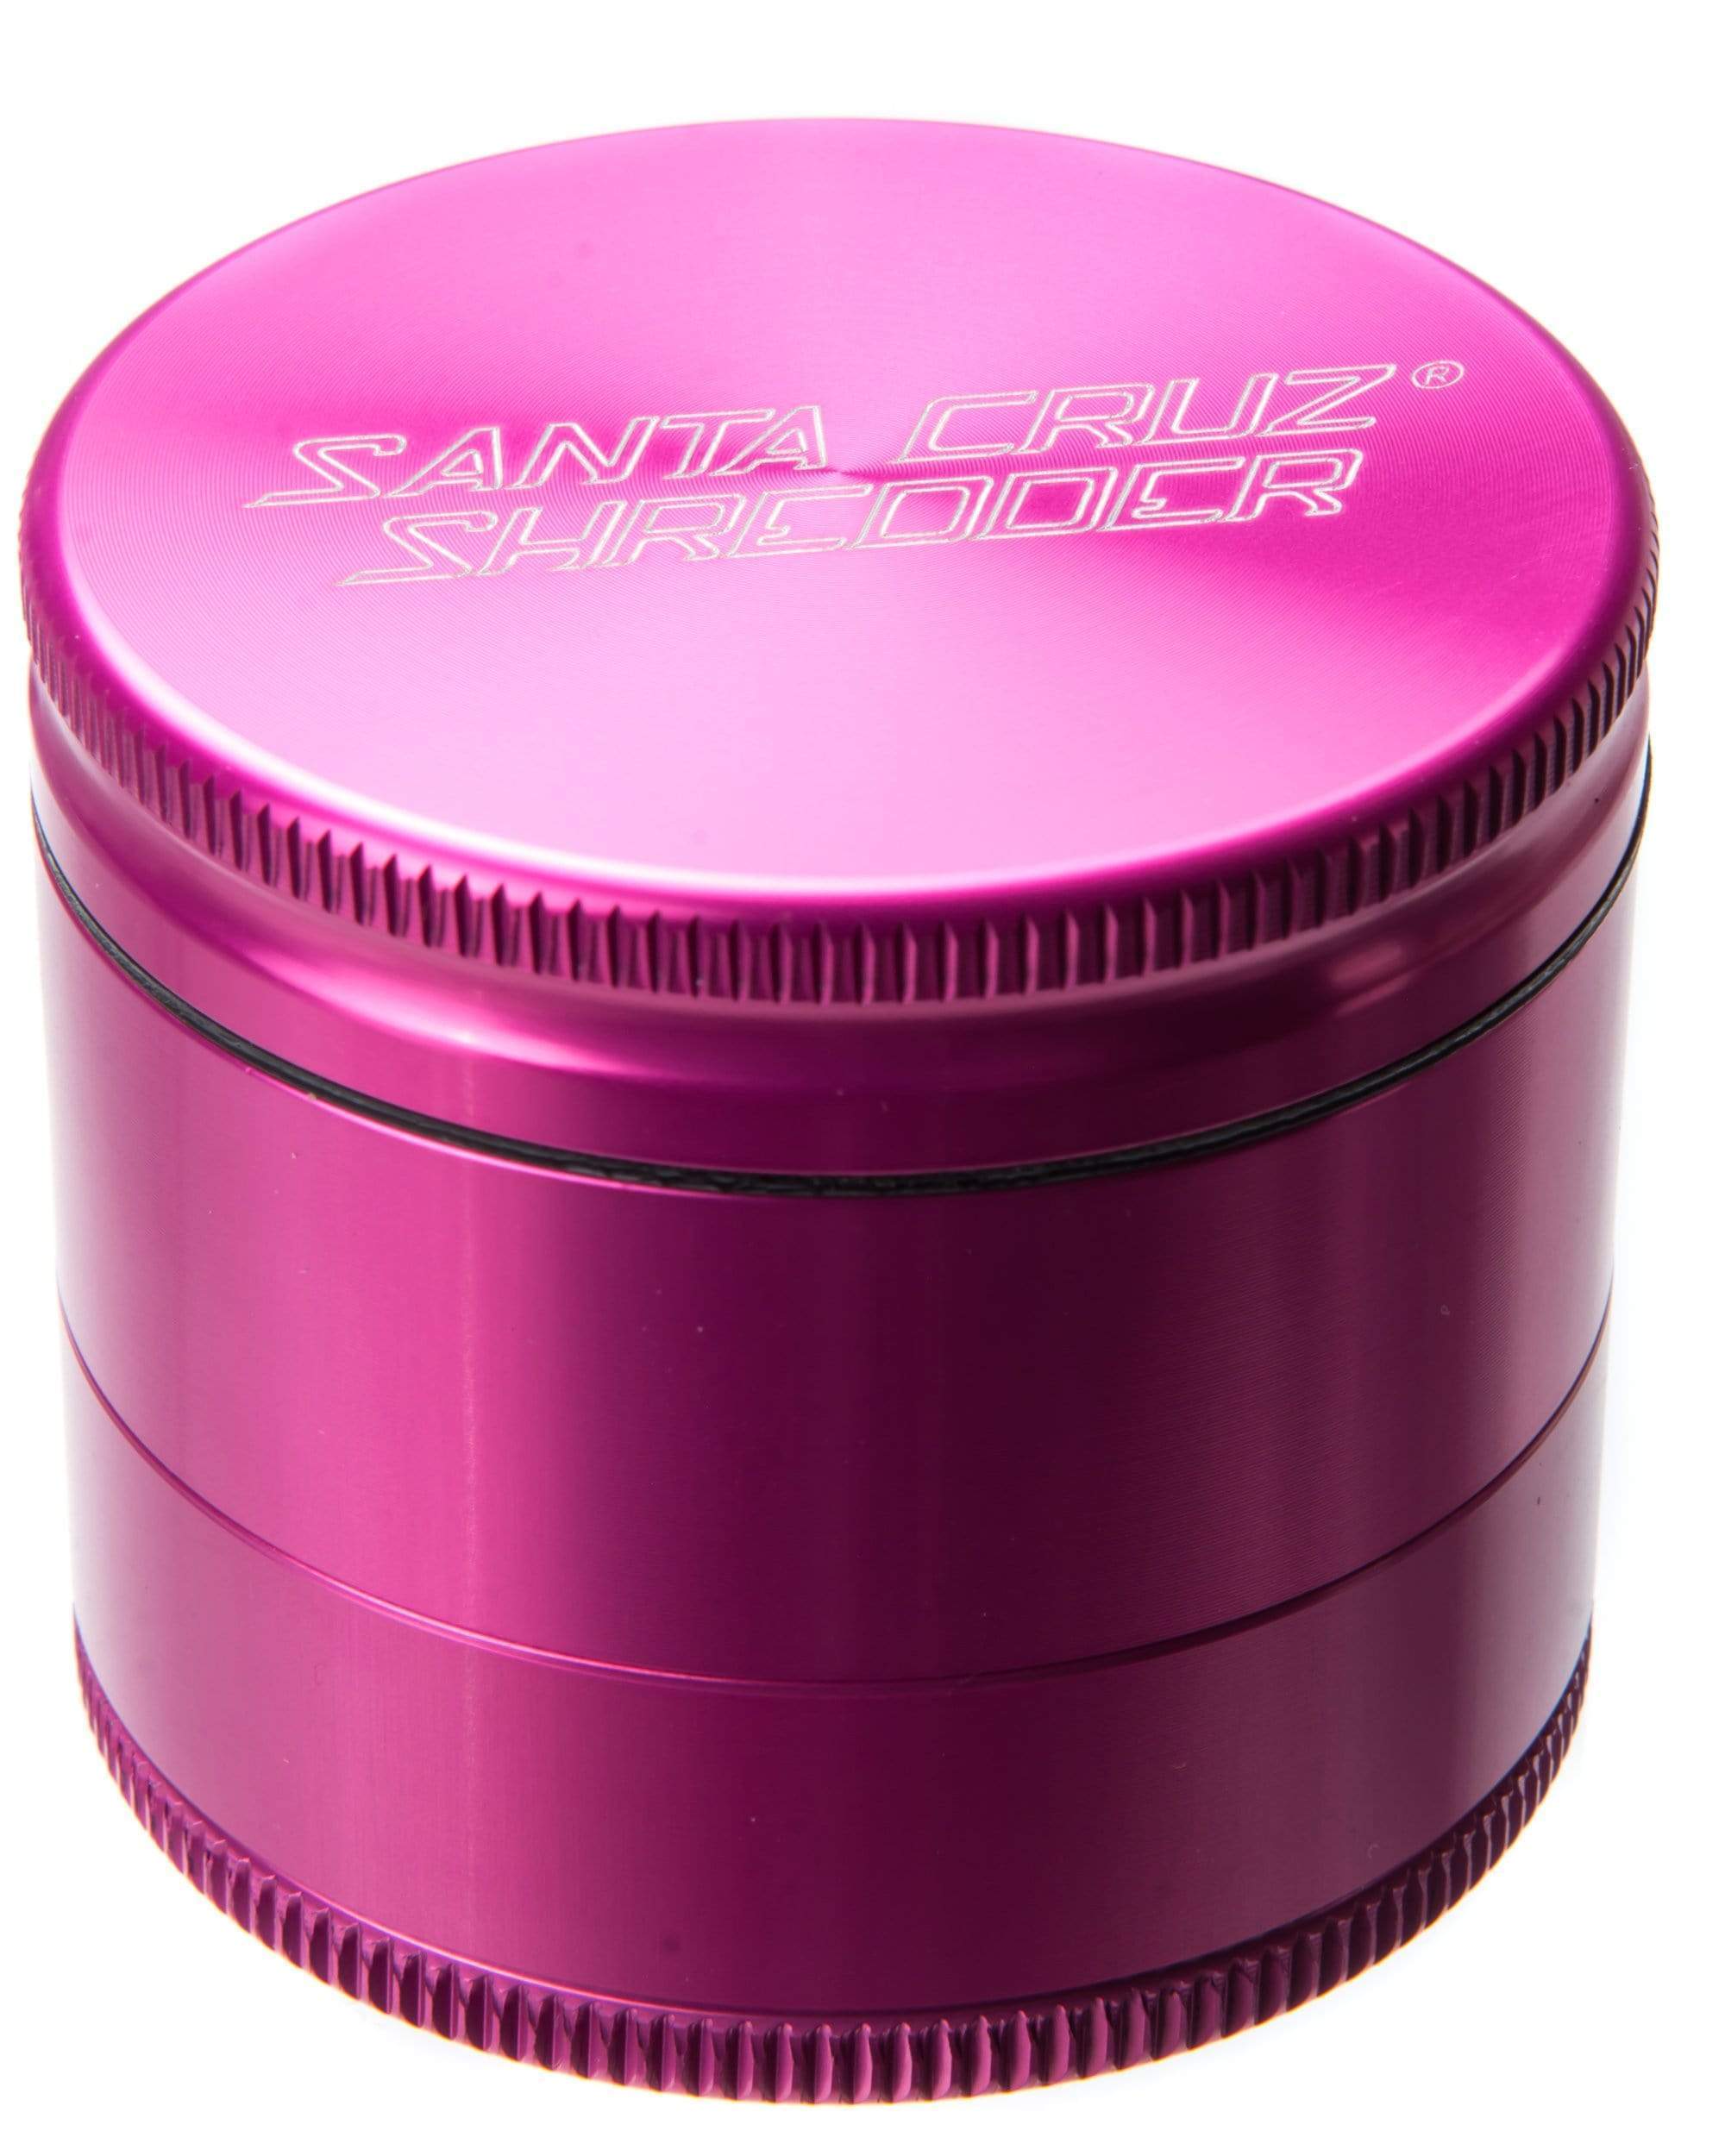 Santa Cruz Shredder Pink Medium 3 Piece Herb Grinder grinder